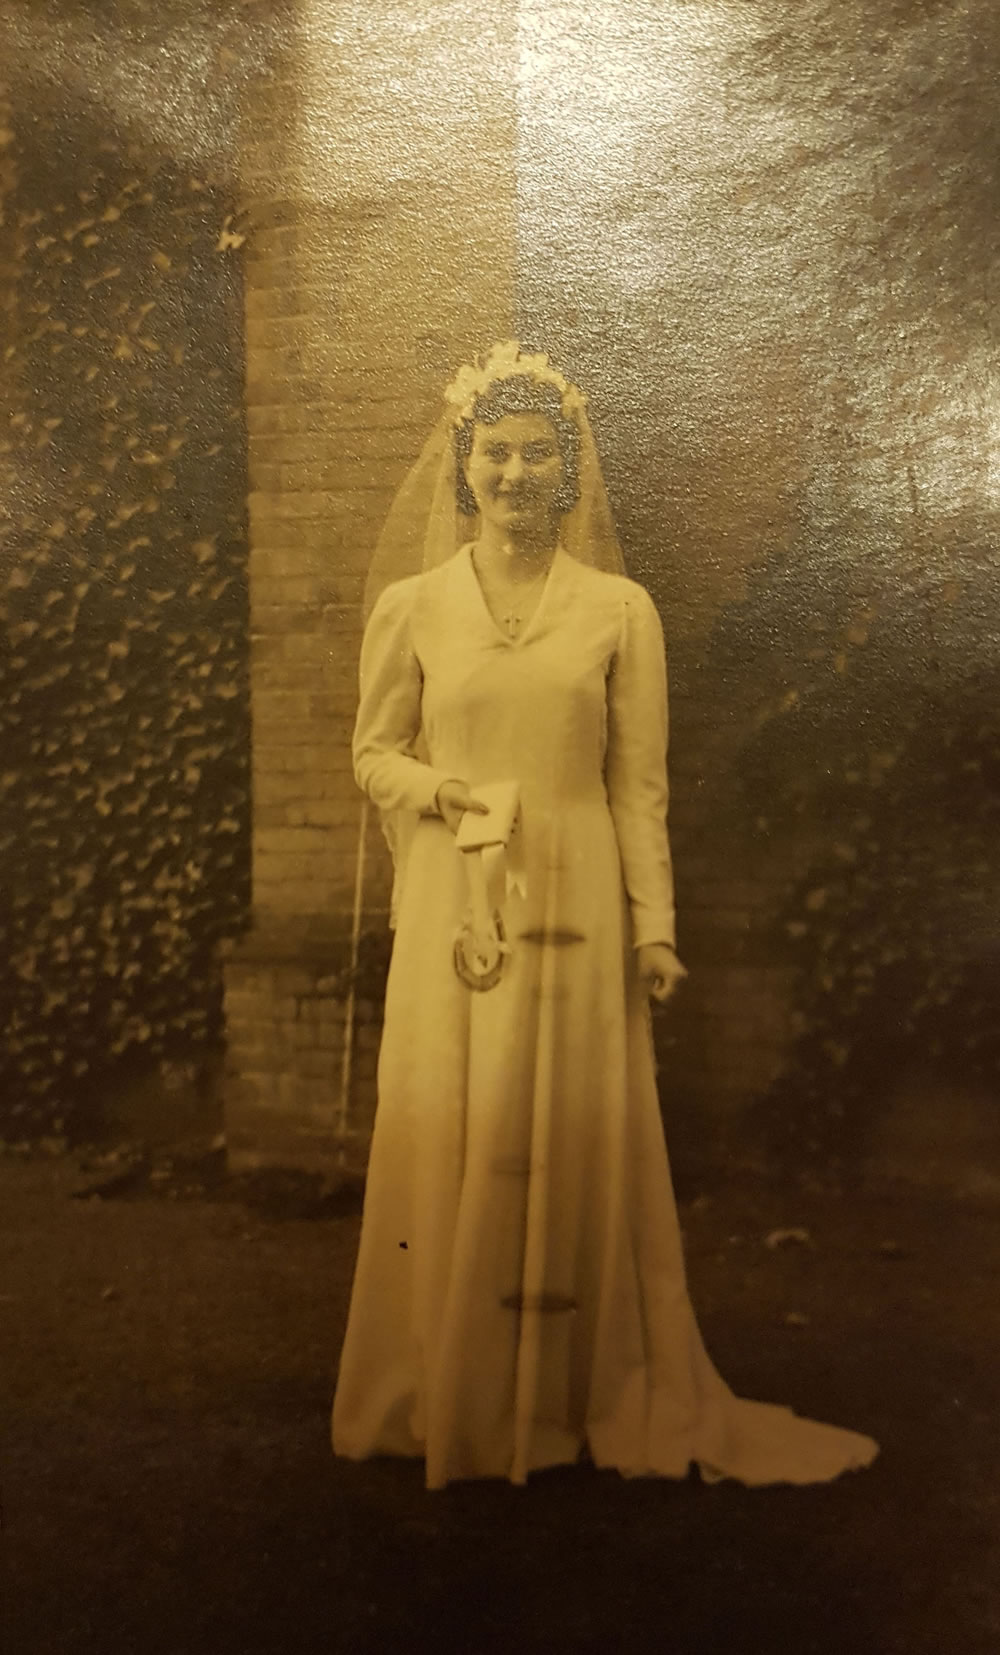 Greta Verdun, Jodie Whittaker's grandmother, on her wedding day